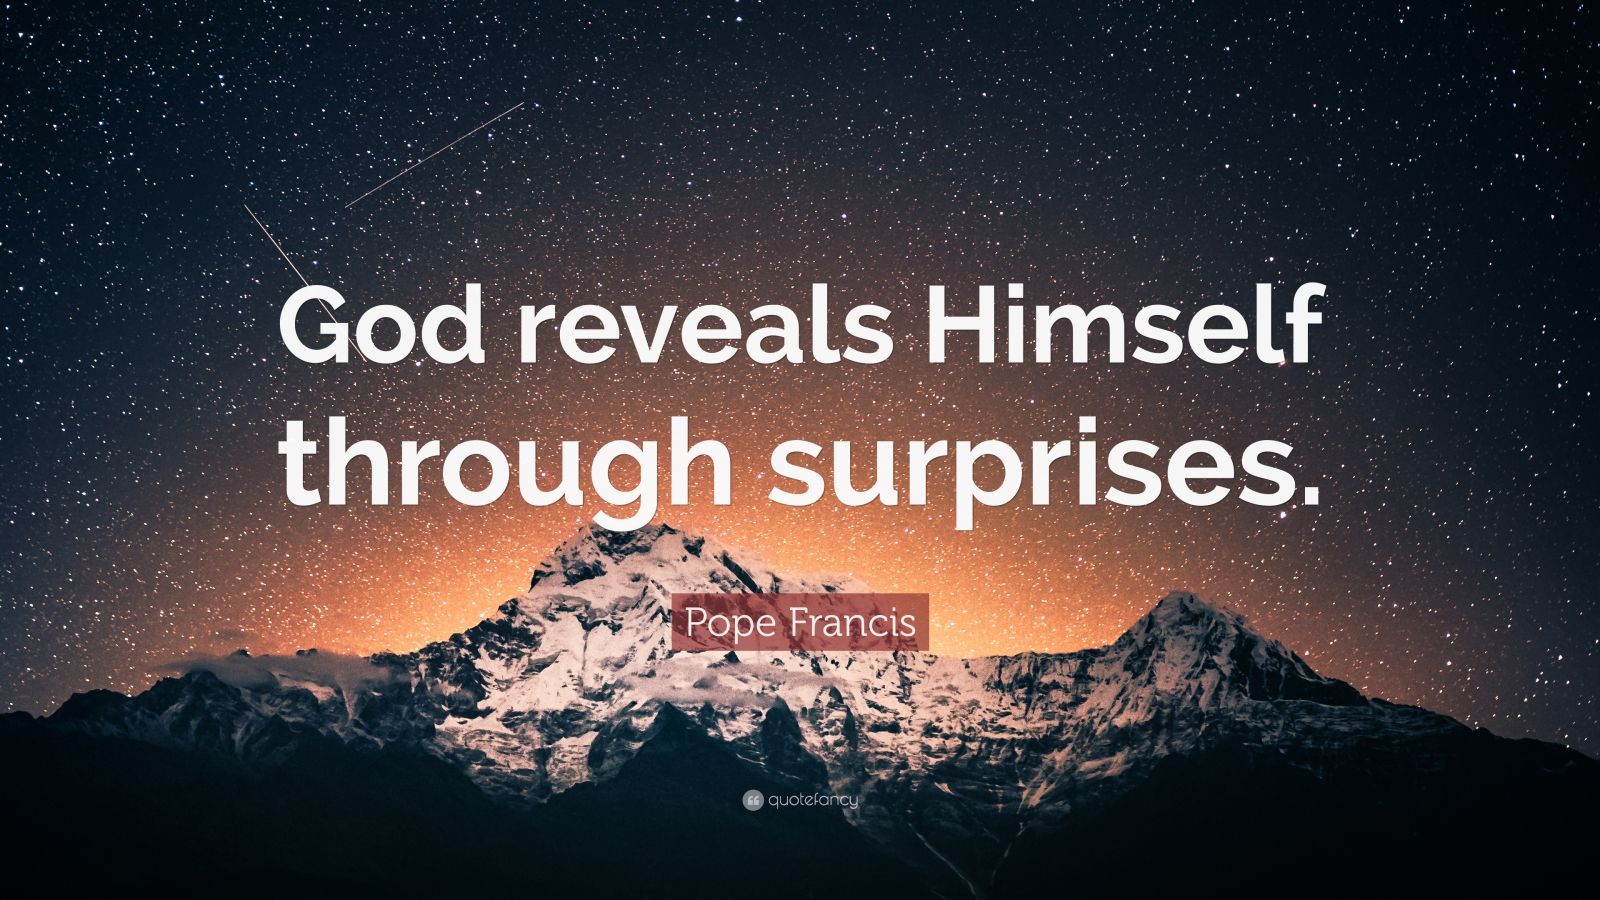 Pope Francis Quote: “God reveals Himself through surprises.” (9 ...